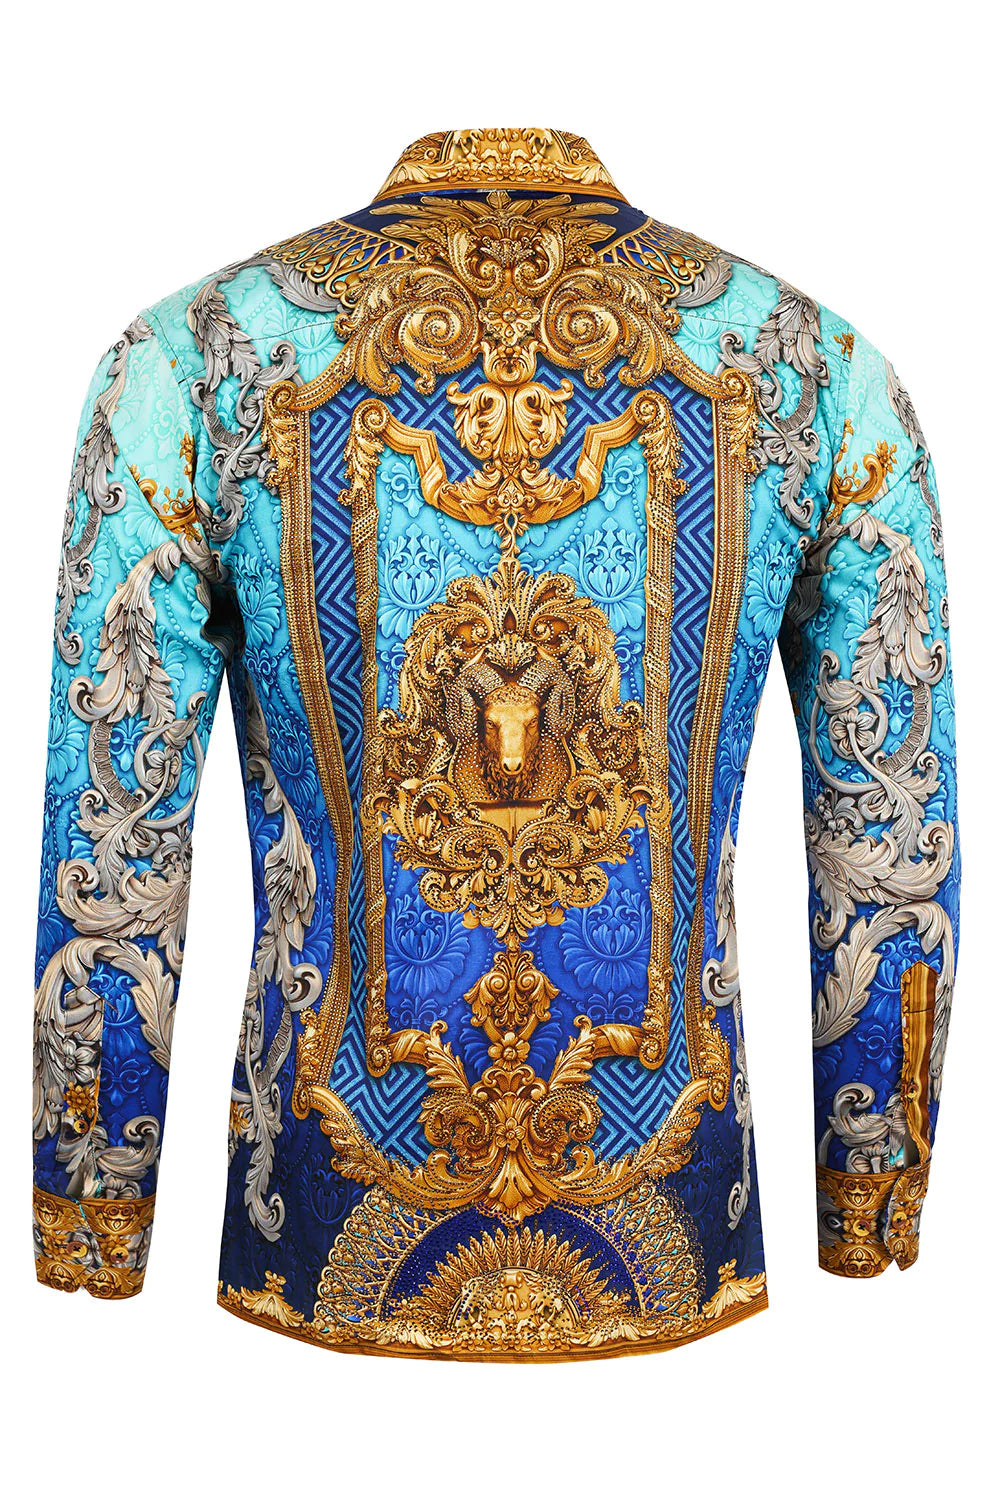 Barabas Men's Floral Exquisite Long Sleeve Shirt